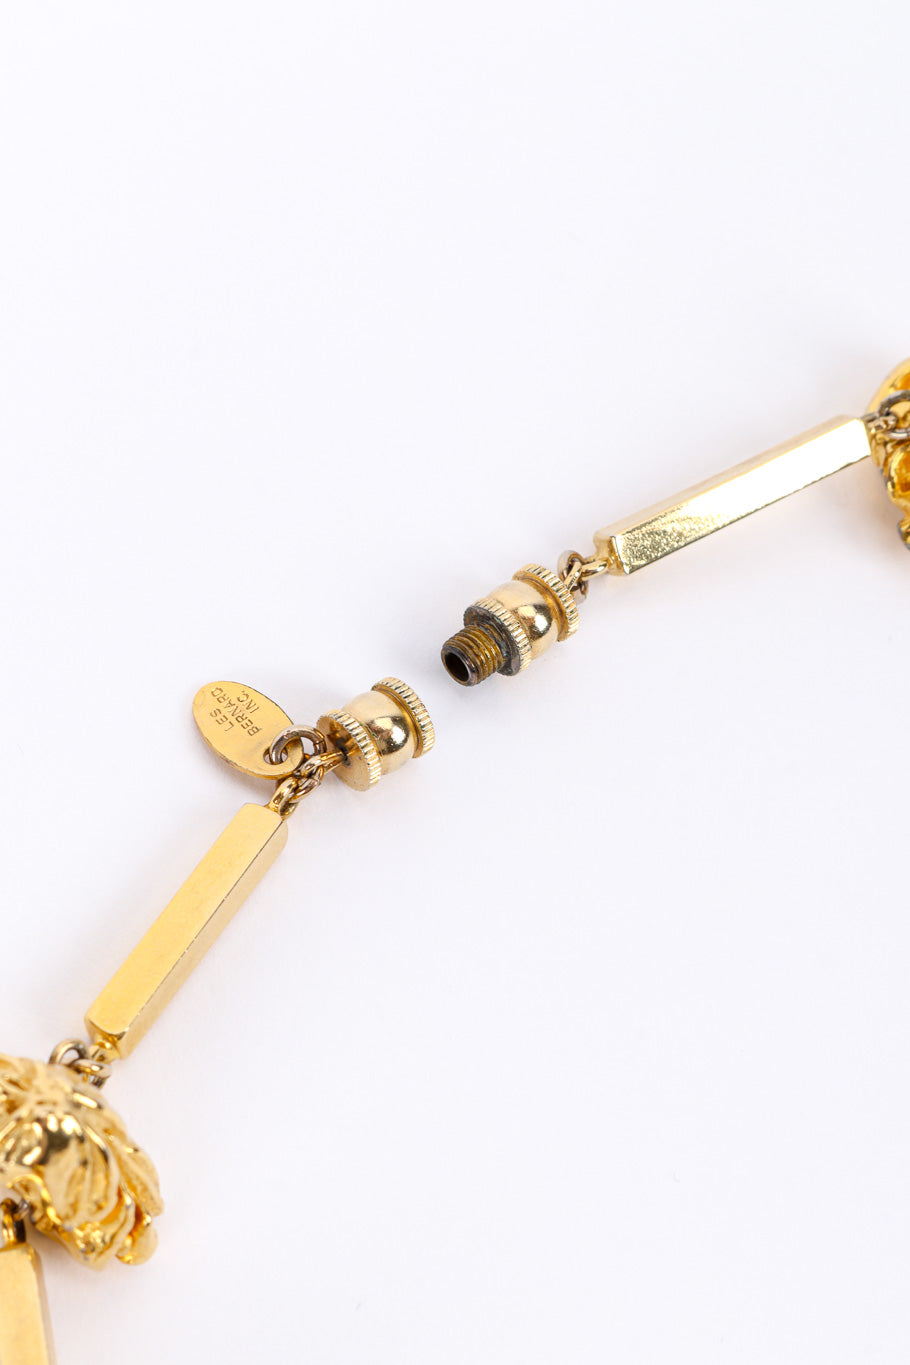 Vintage Les Bernard Nugget Chain Necklace closure unclasped @recessla